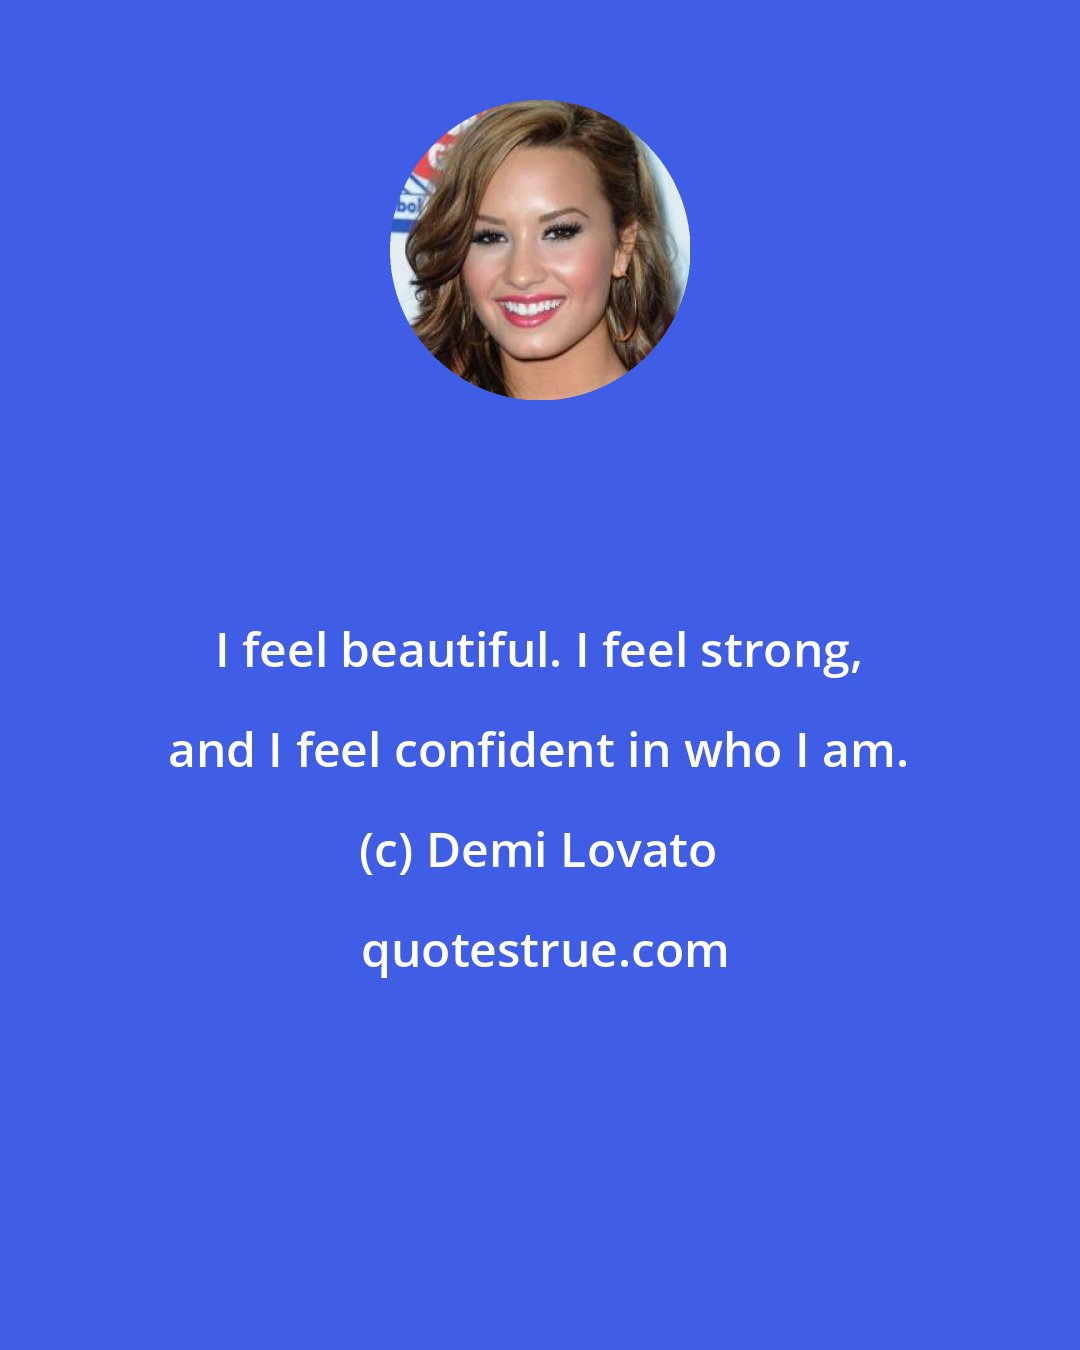 Demi Lovato: I feel beautiful. I feel strong, and I feel confident in who I am.